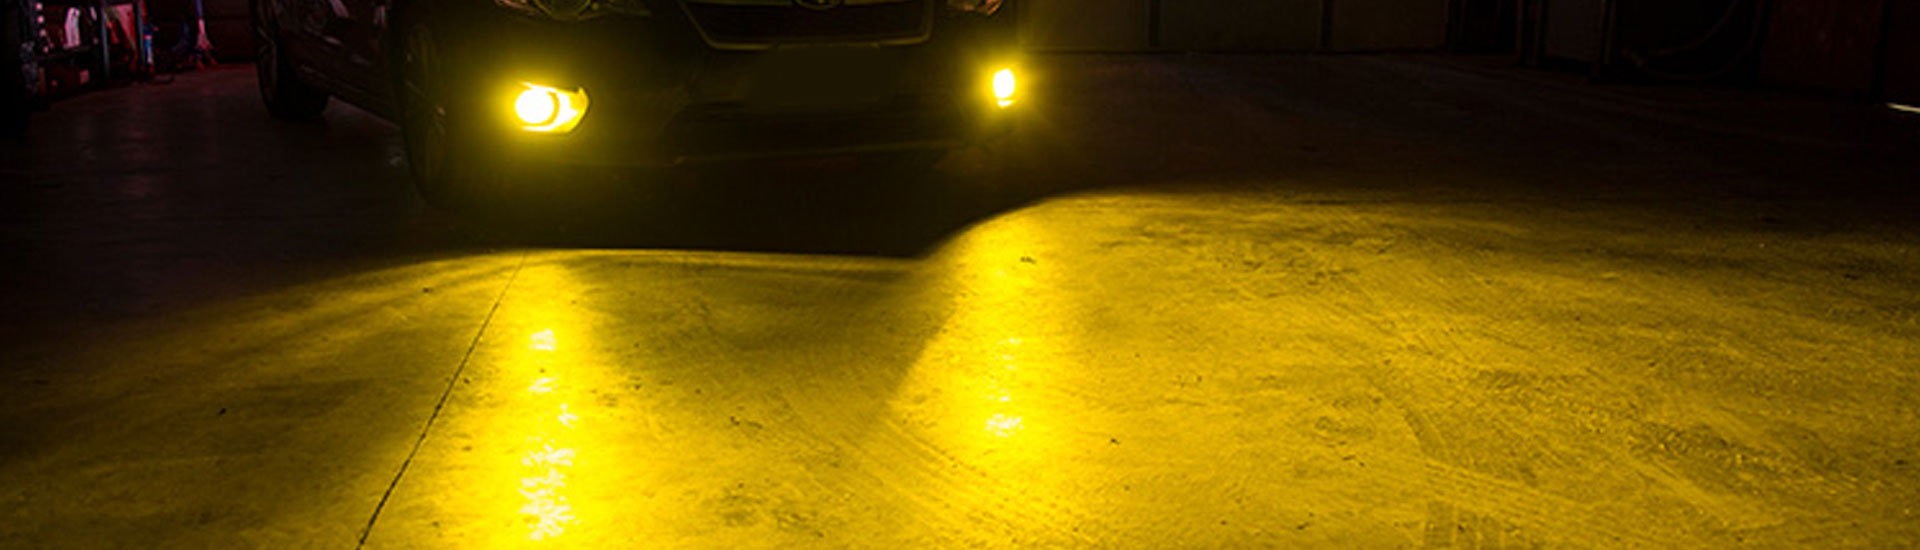 Audi Cabriolet Fog Light Tint Covers